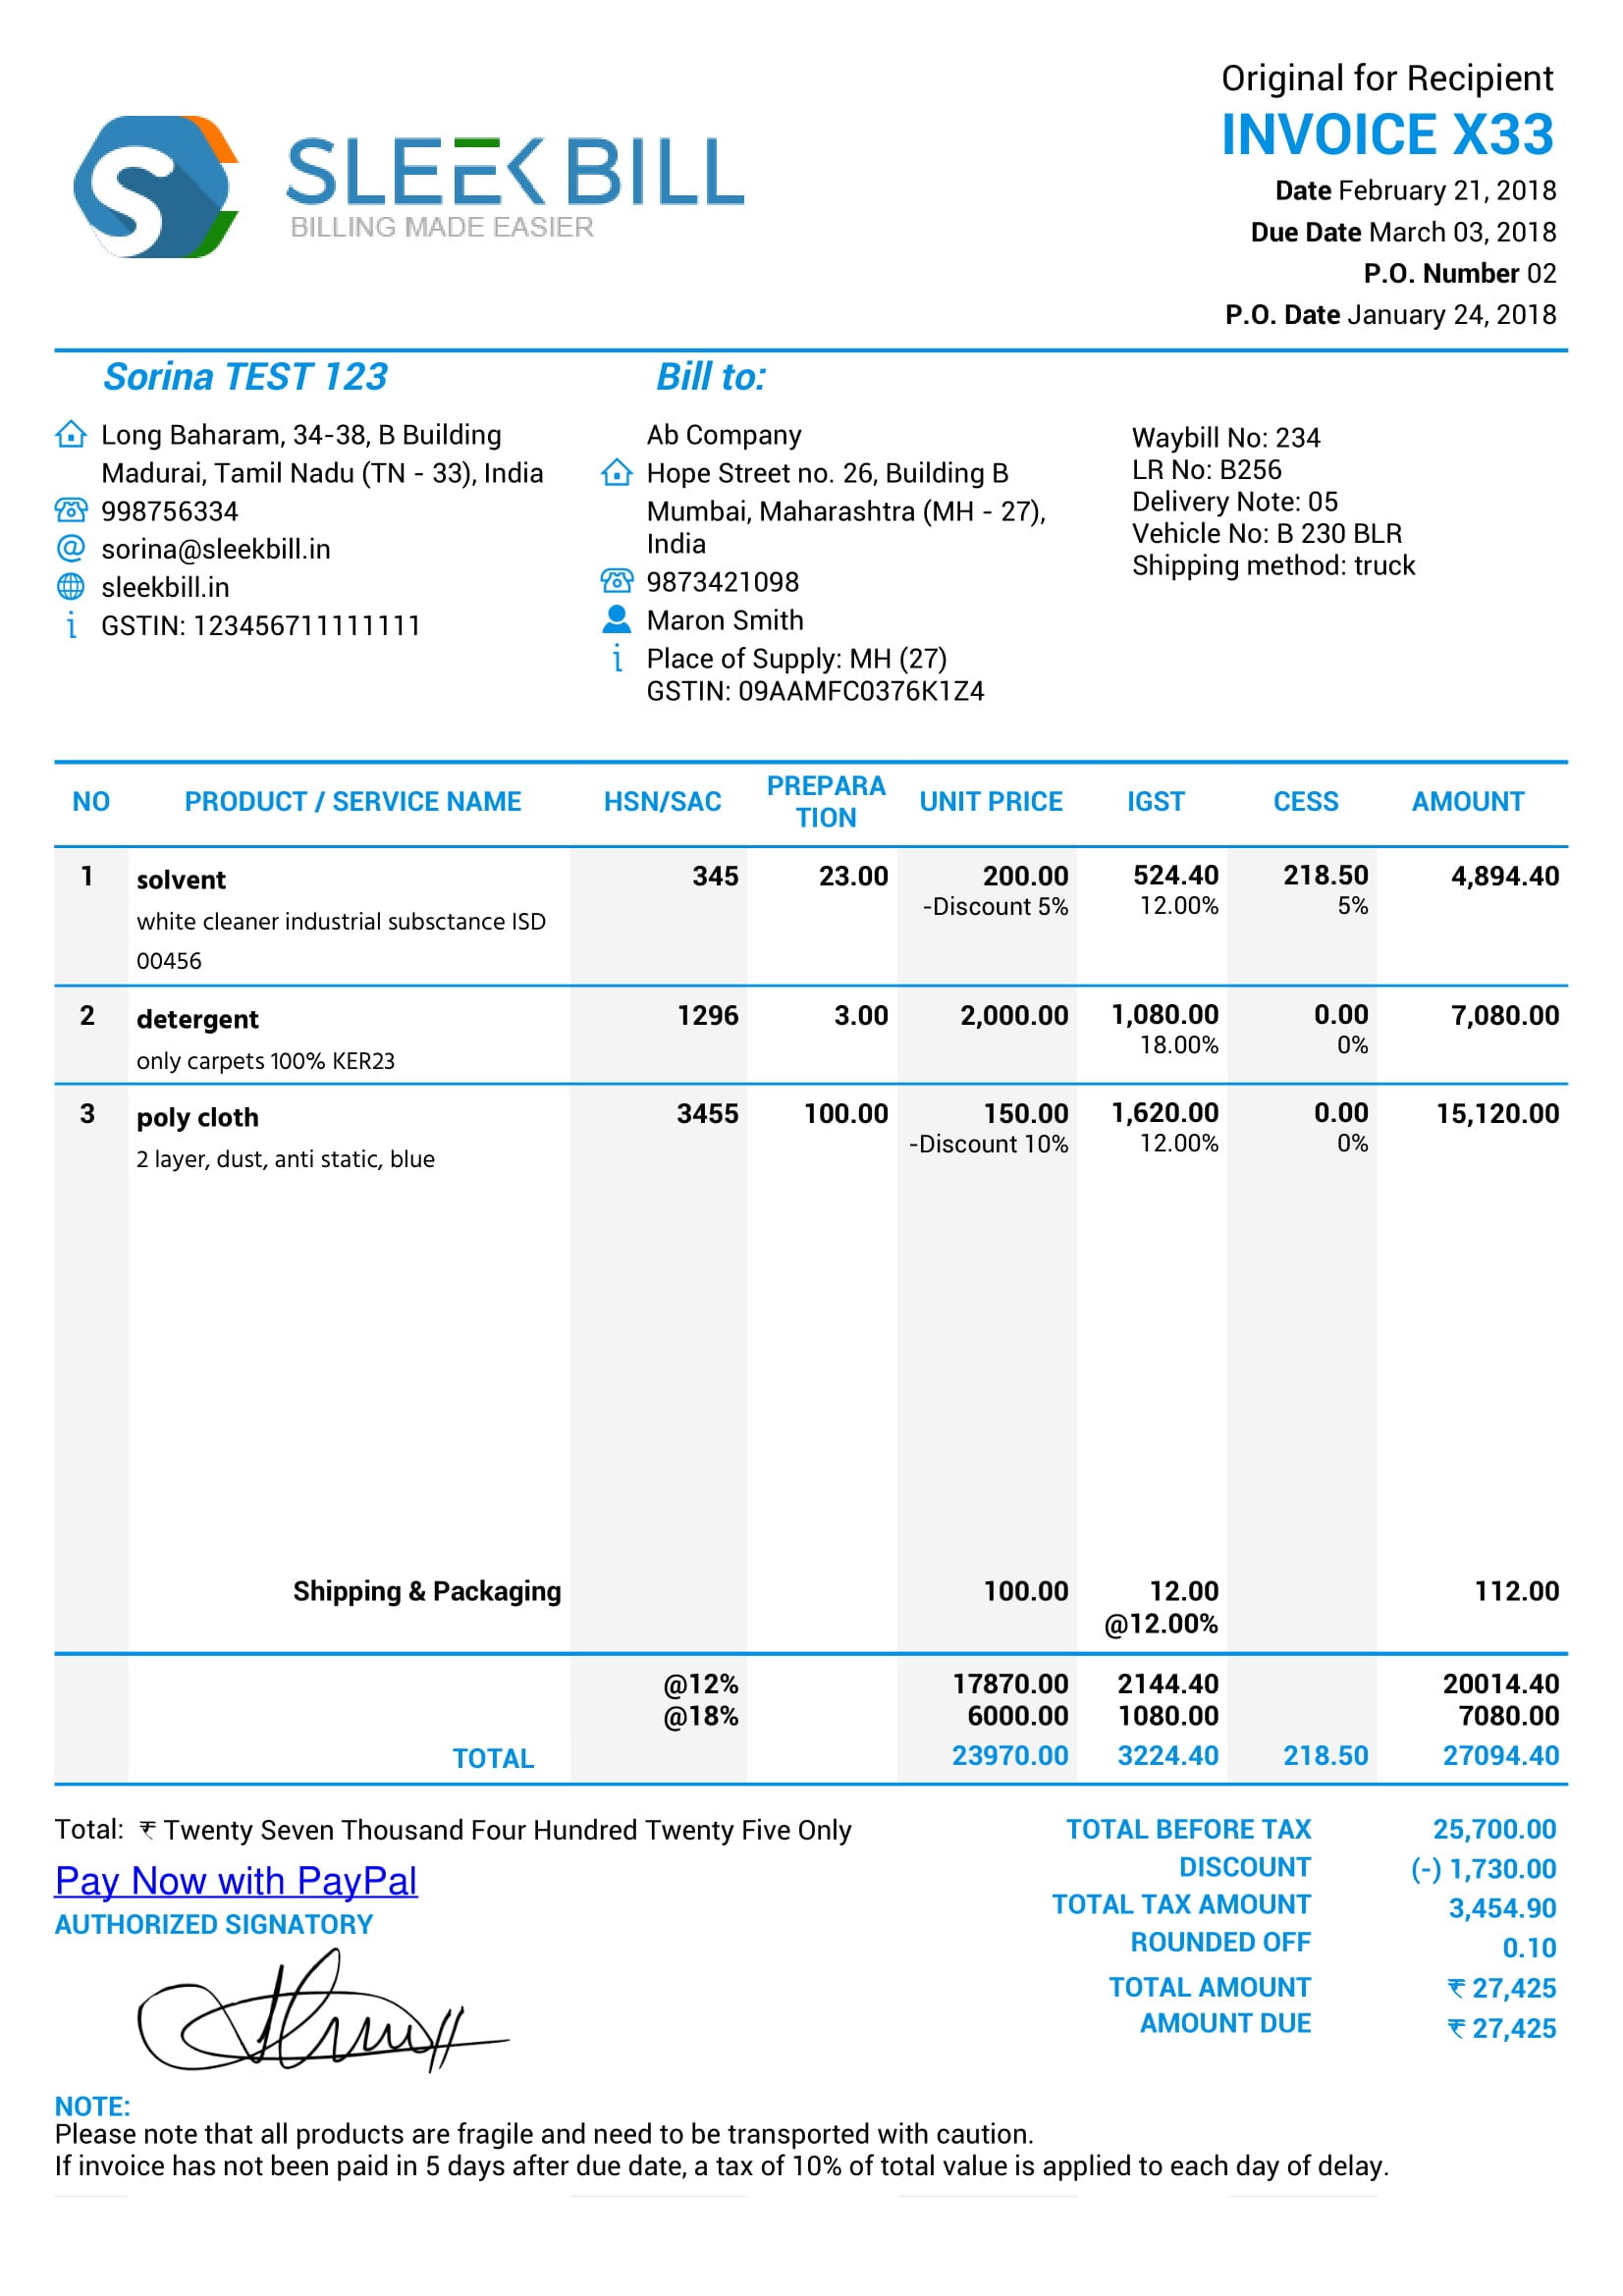 tax bill format toggiwpartco sample image for gst bill